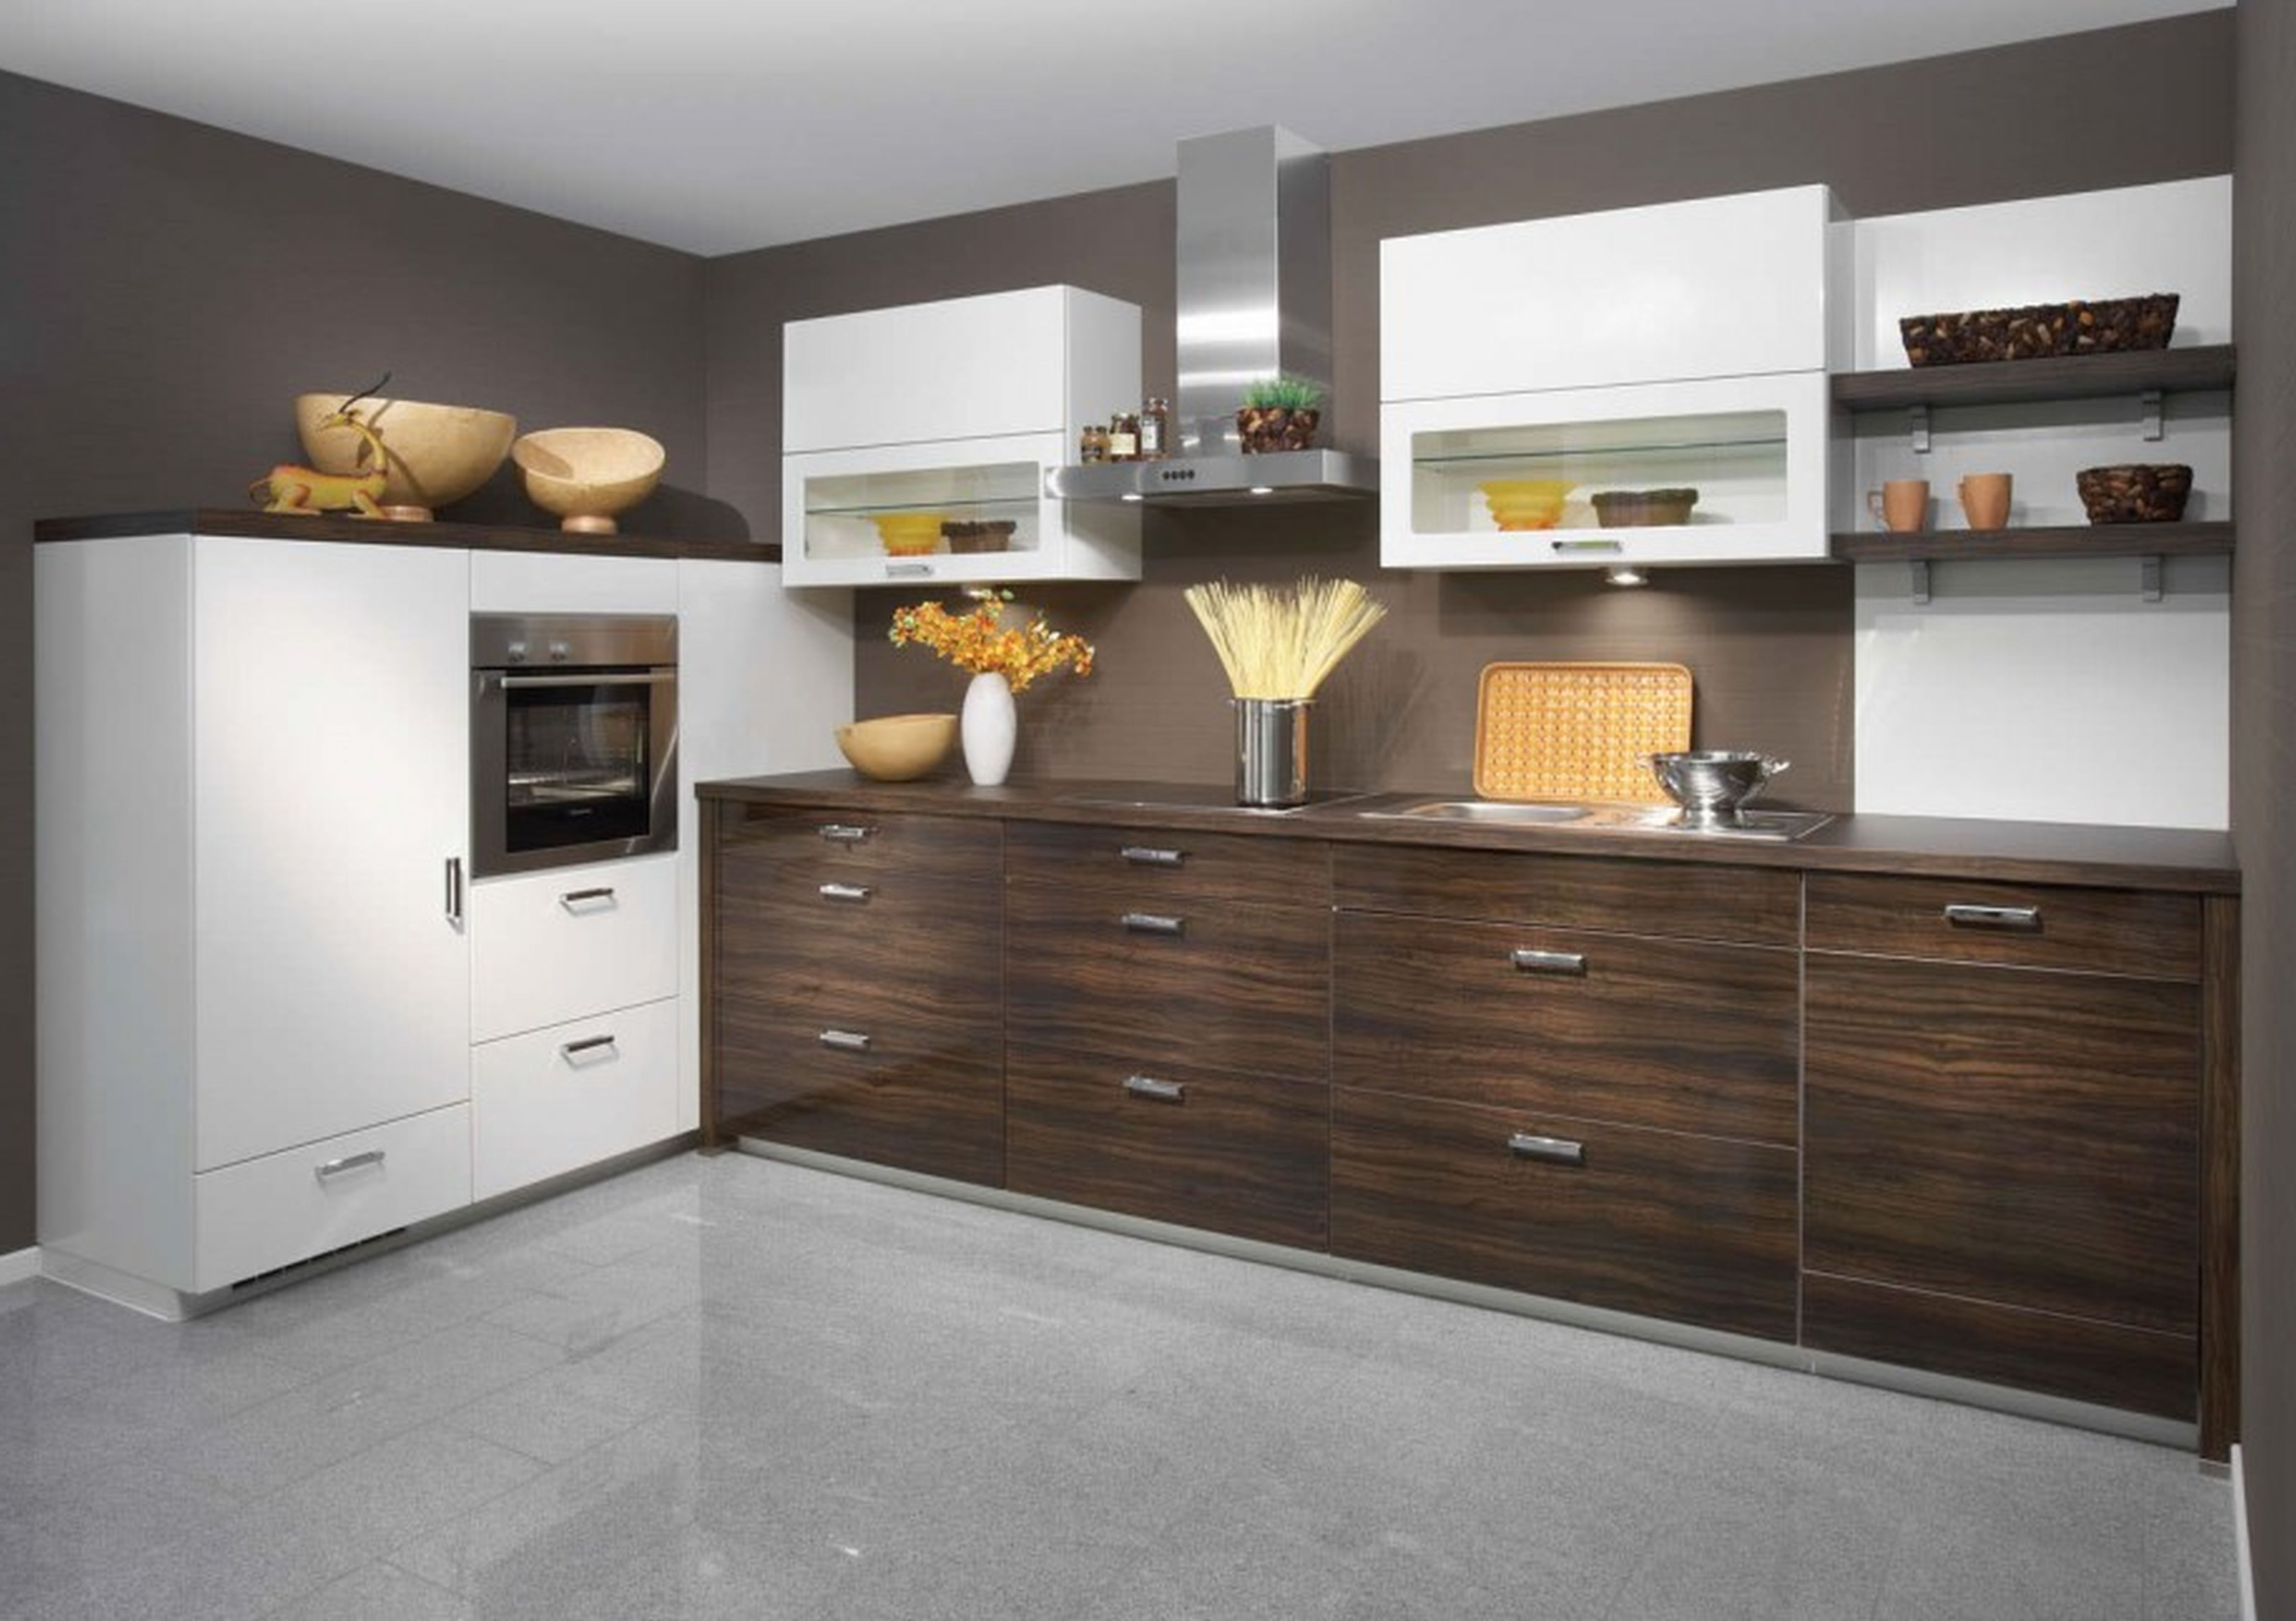 25+ Latest Design Ideas Of Modular Kitchen Pictures